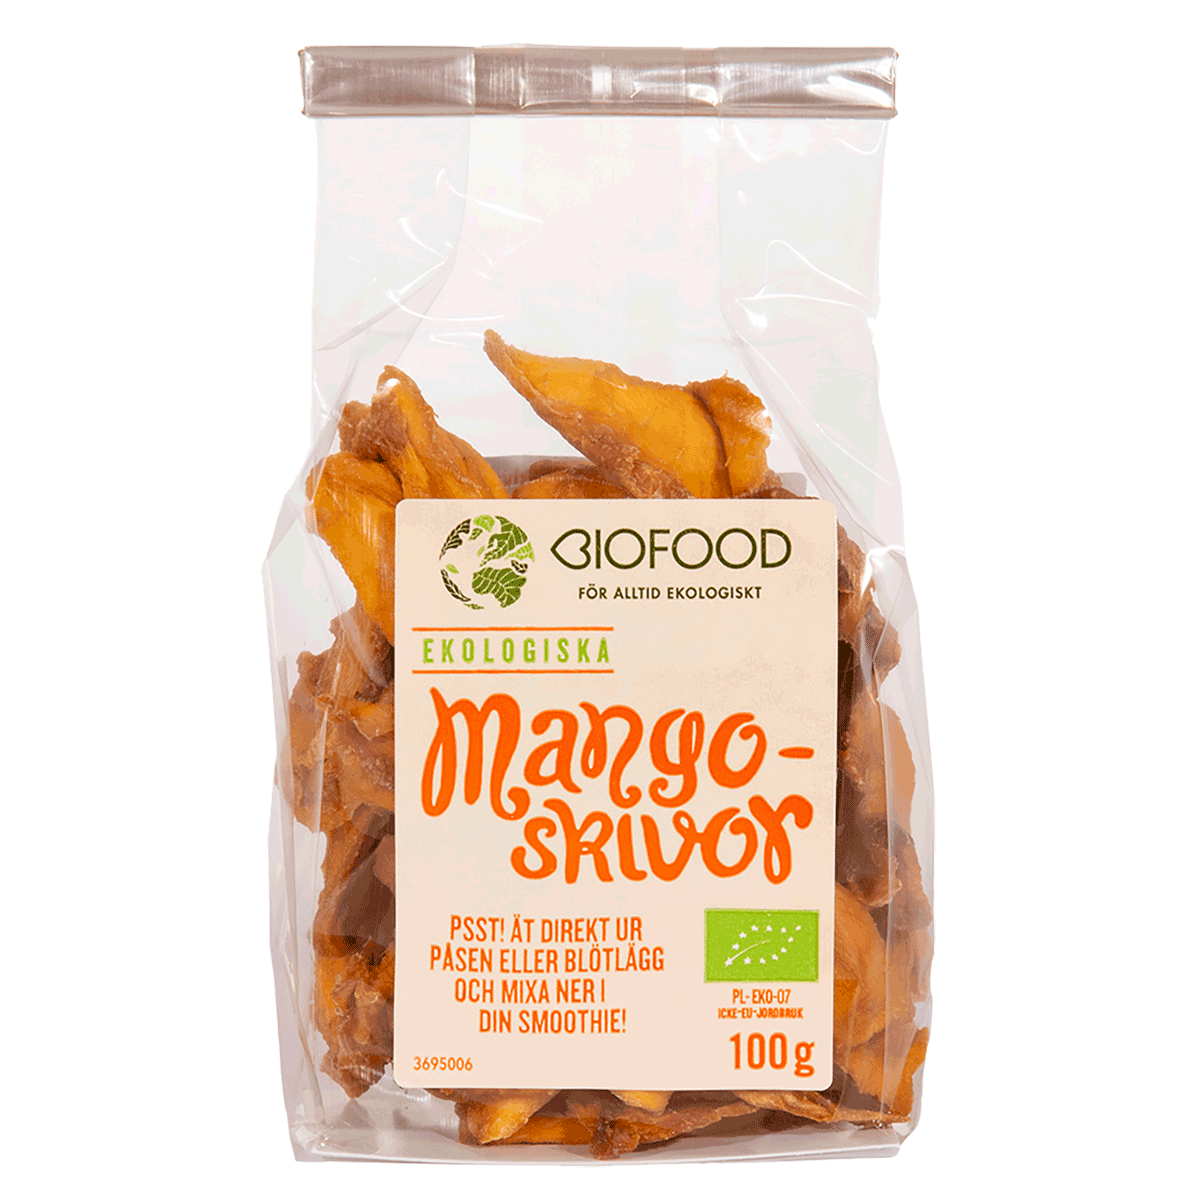 Biofood's Mangoskivor Torkade'